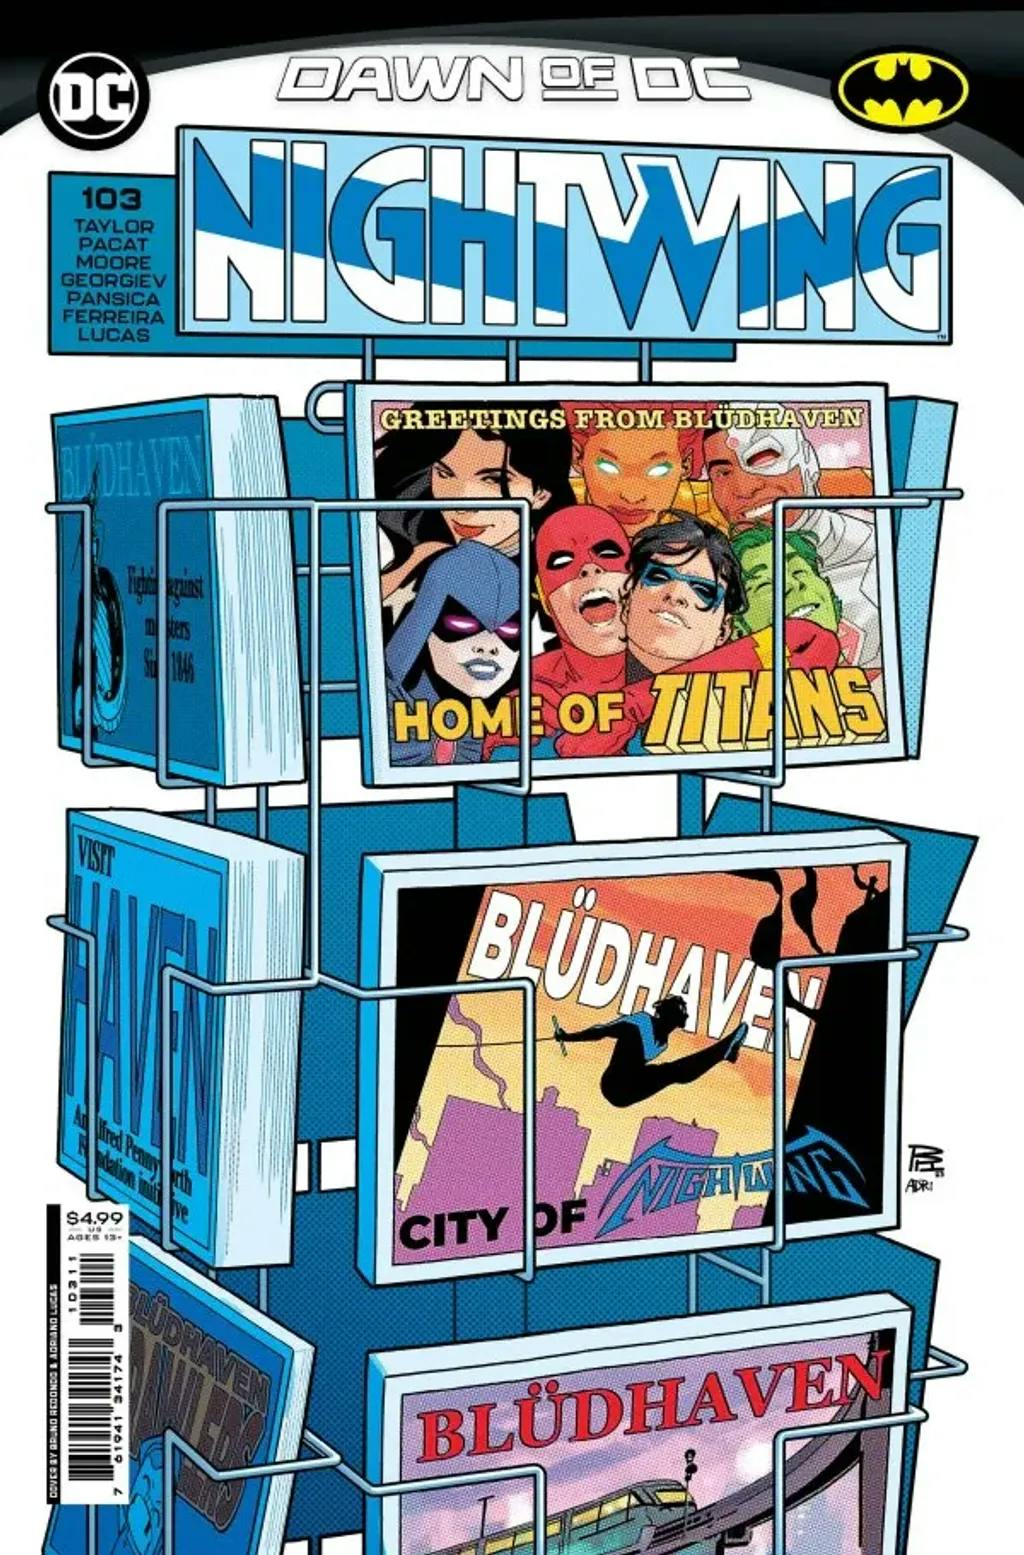 Nightwing #103 By Tom Taylor, C.S. Pacat, Travis Moore, Vasco Georgiev, Adriano Lucas